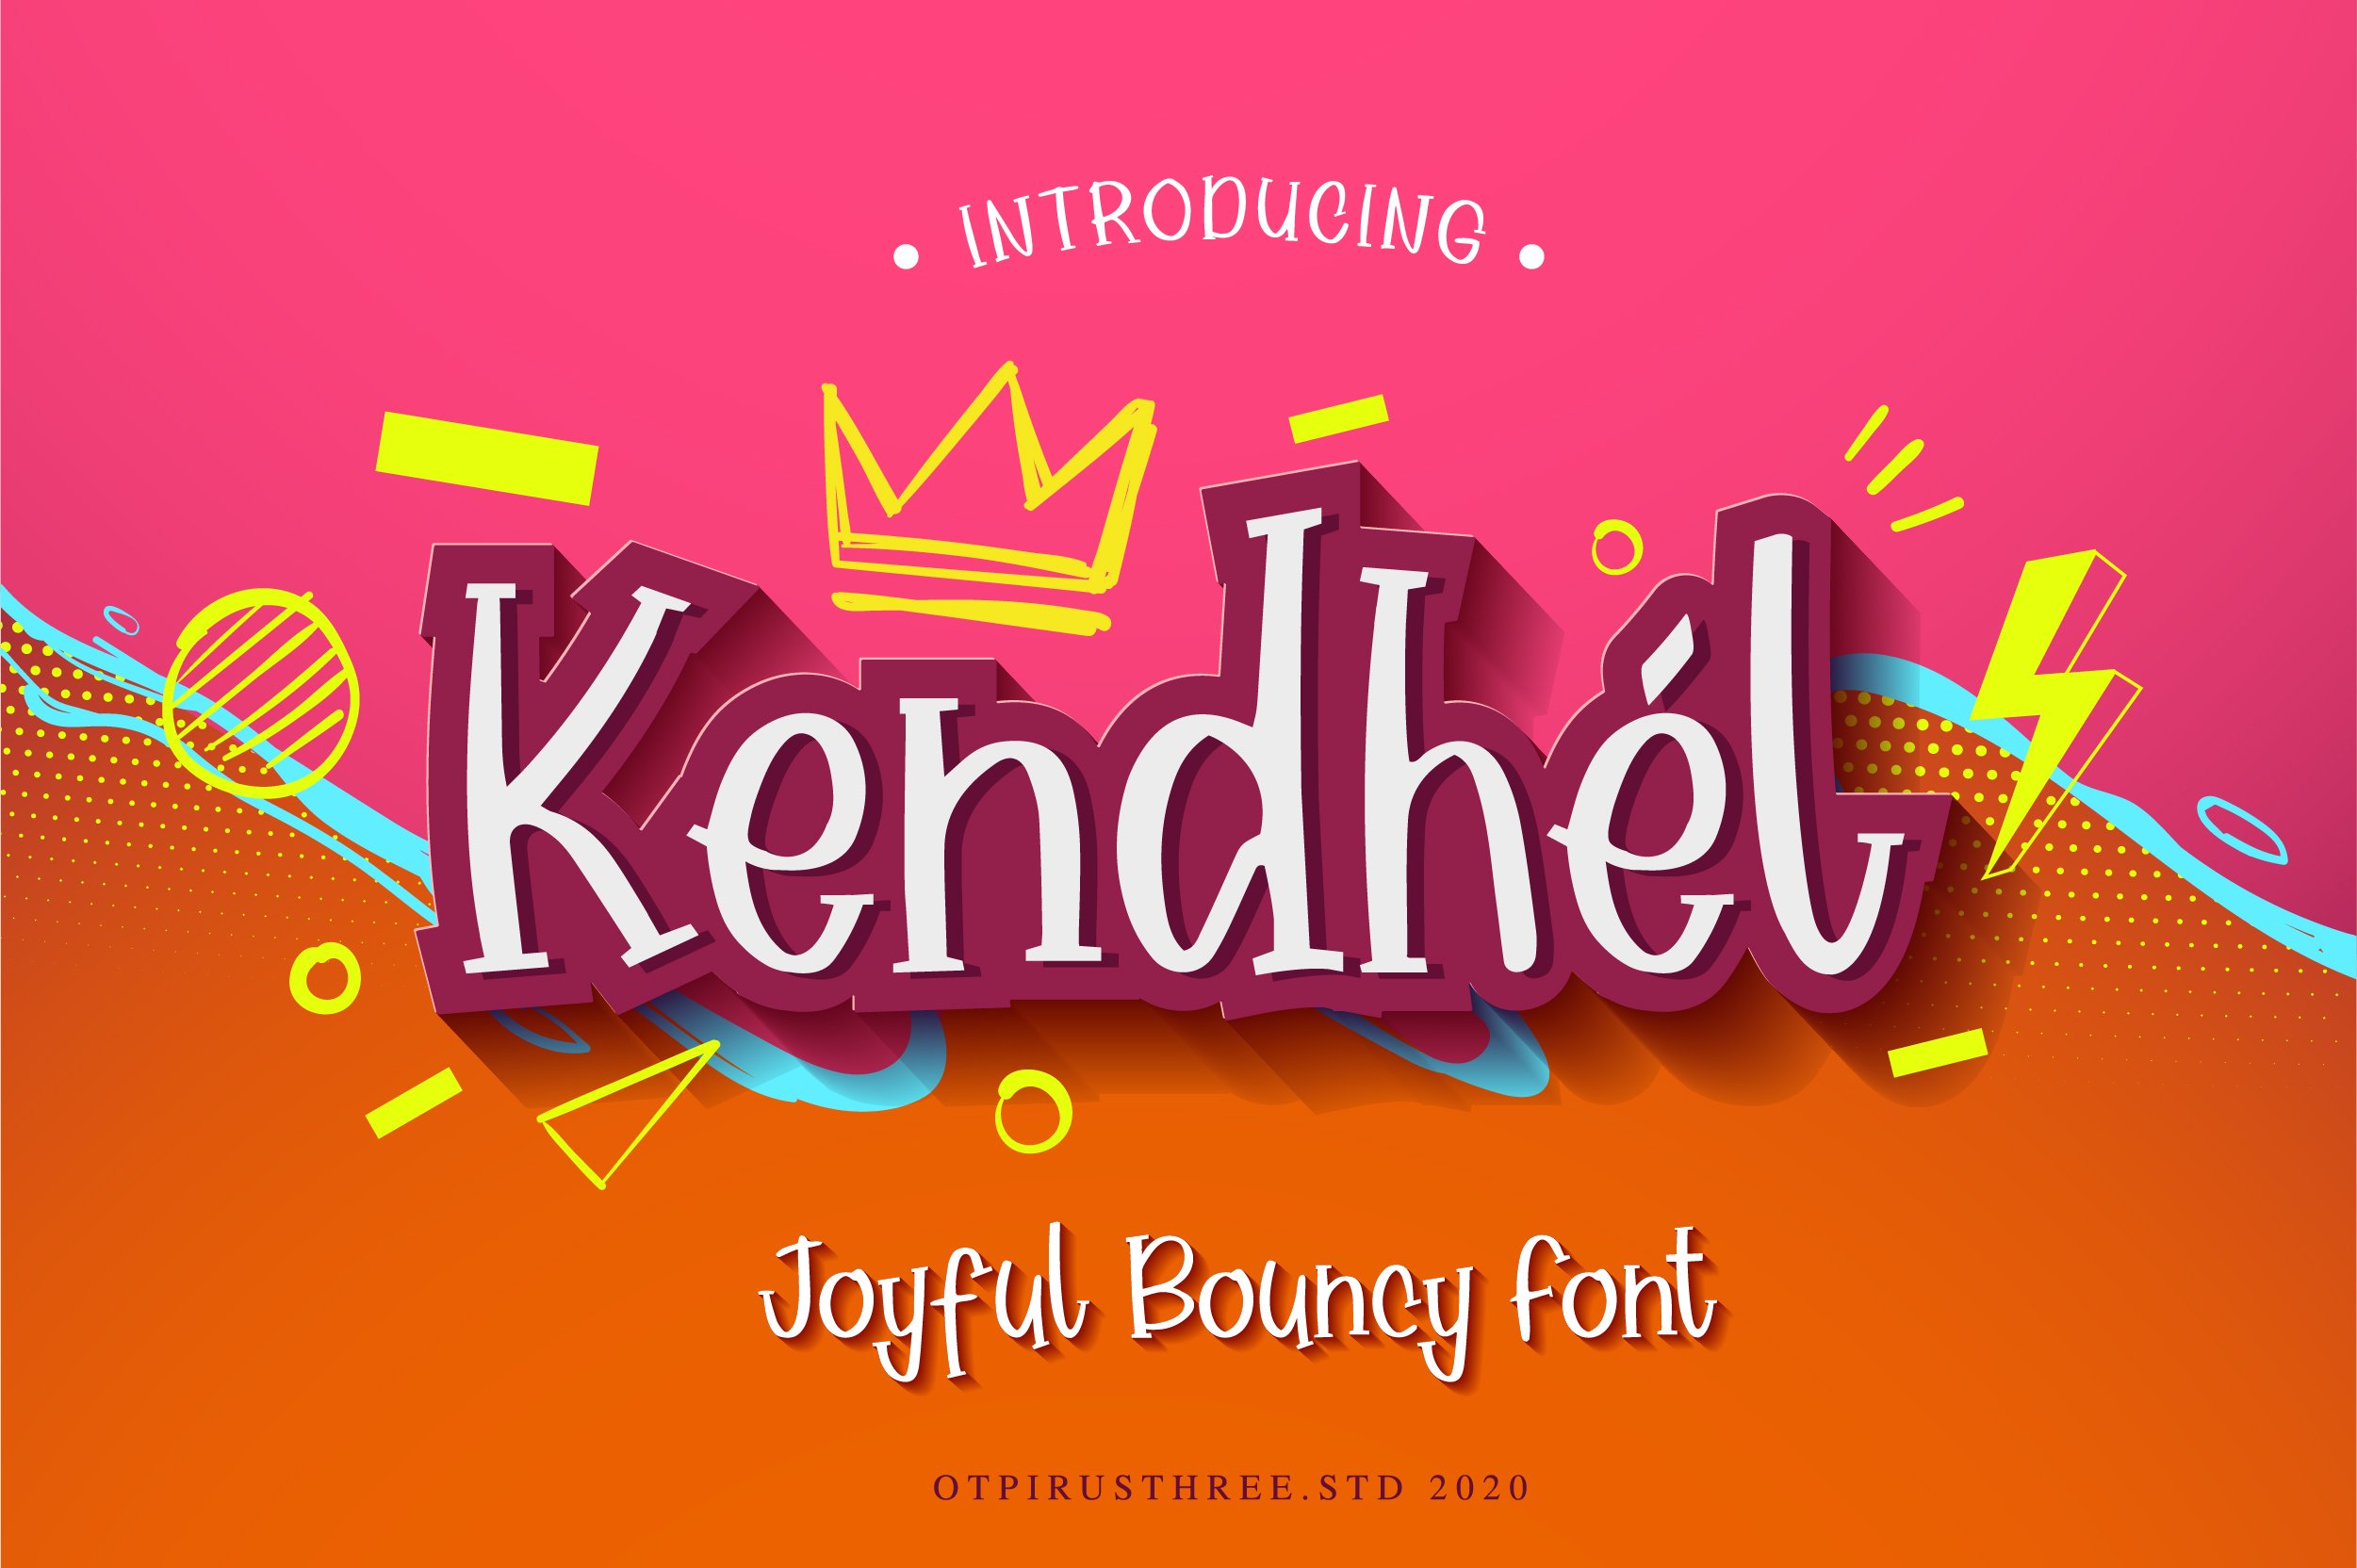 Kendhel Joyful and Bouncy Font cover image.